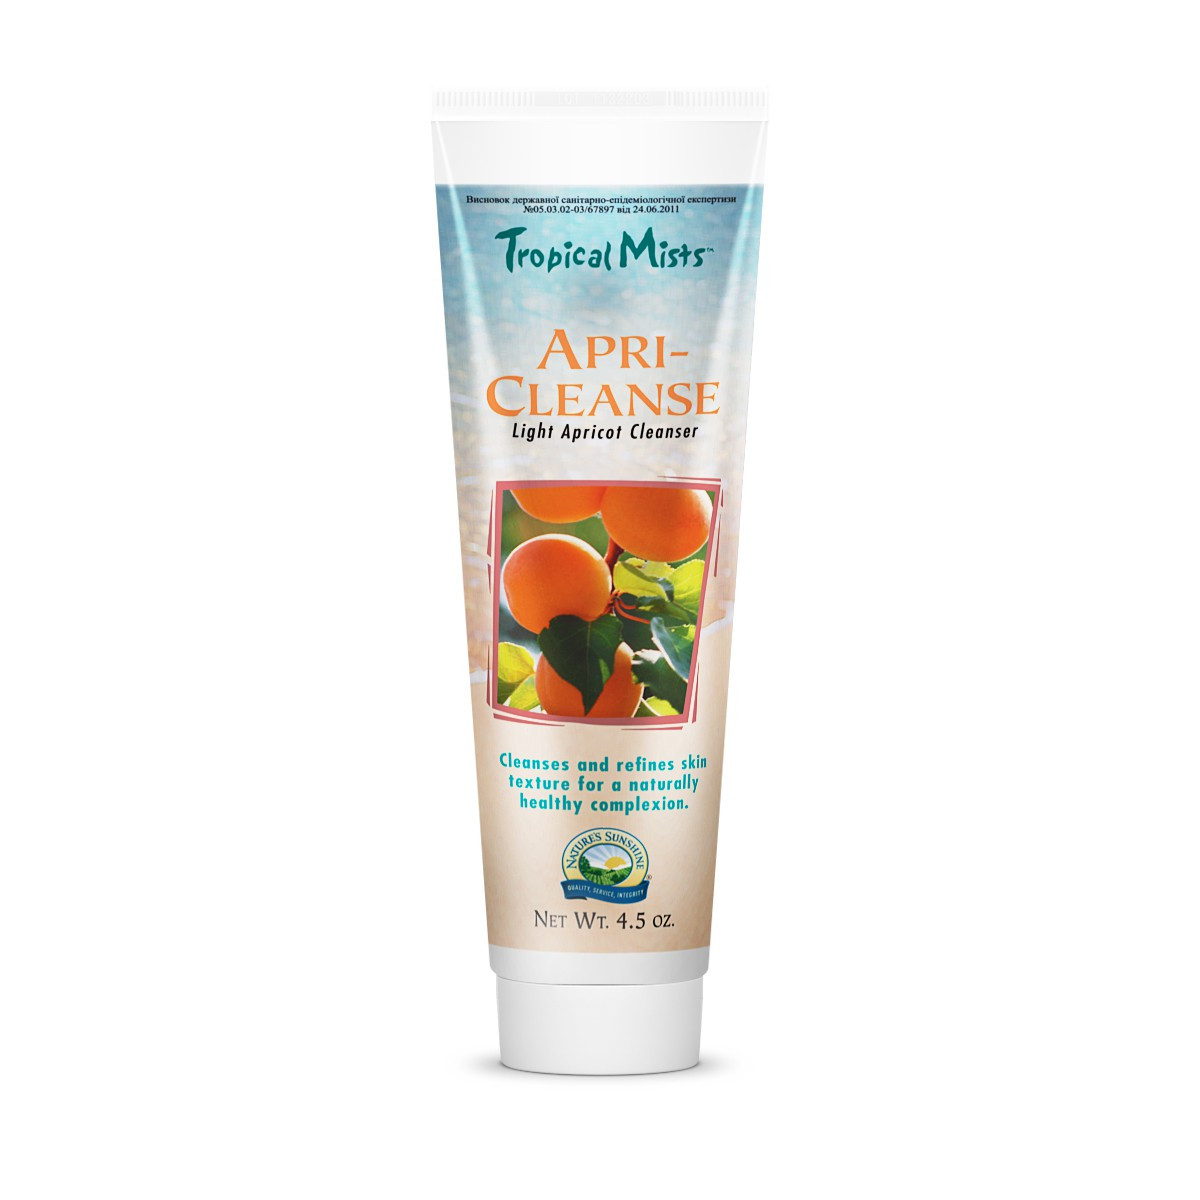 Скраб абрикосовый «Апри-клинс» для лица и тела, Api-Cleanse Light Apricot Cleanser, 135 мг, США